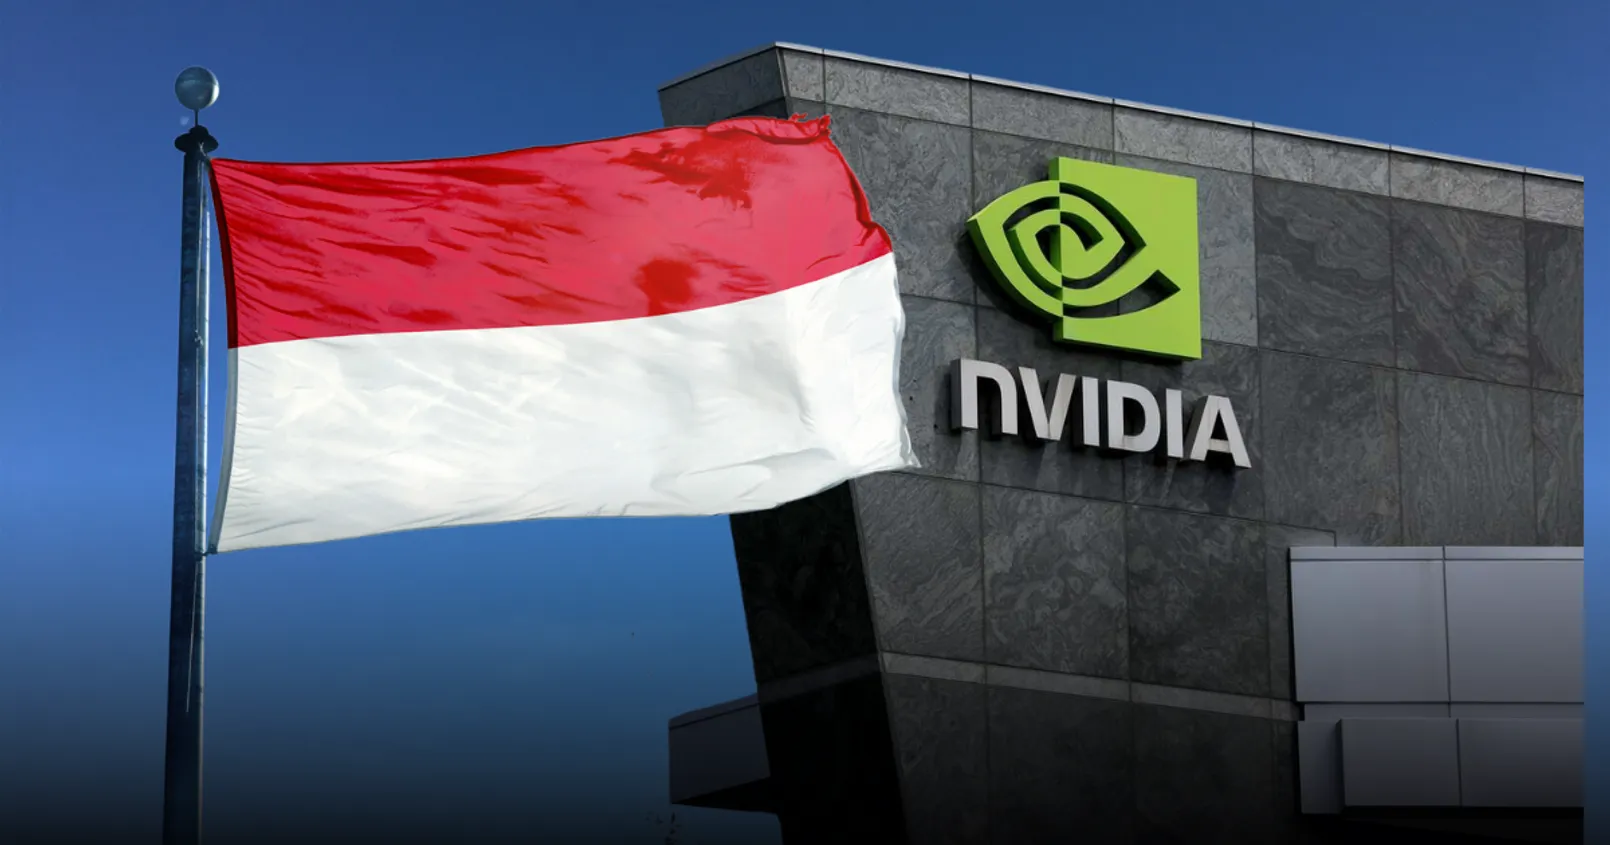 Nvidia จับมือรัฐบาลอินโดนีเซีย! ก่อตั้งศูนย์ AI ด้วยงบ 200 ล้านดอลลาร์